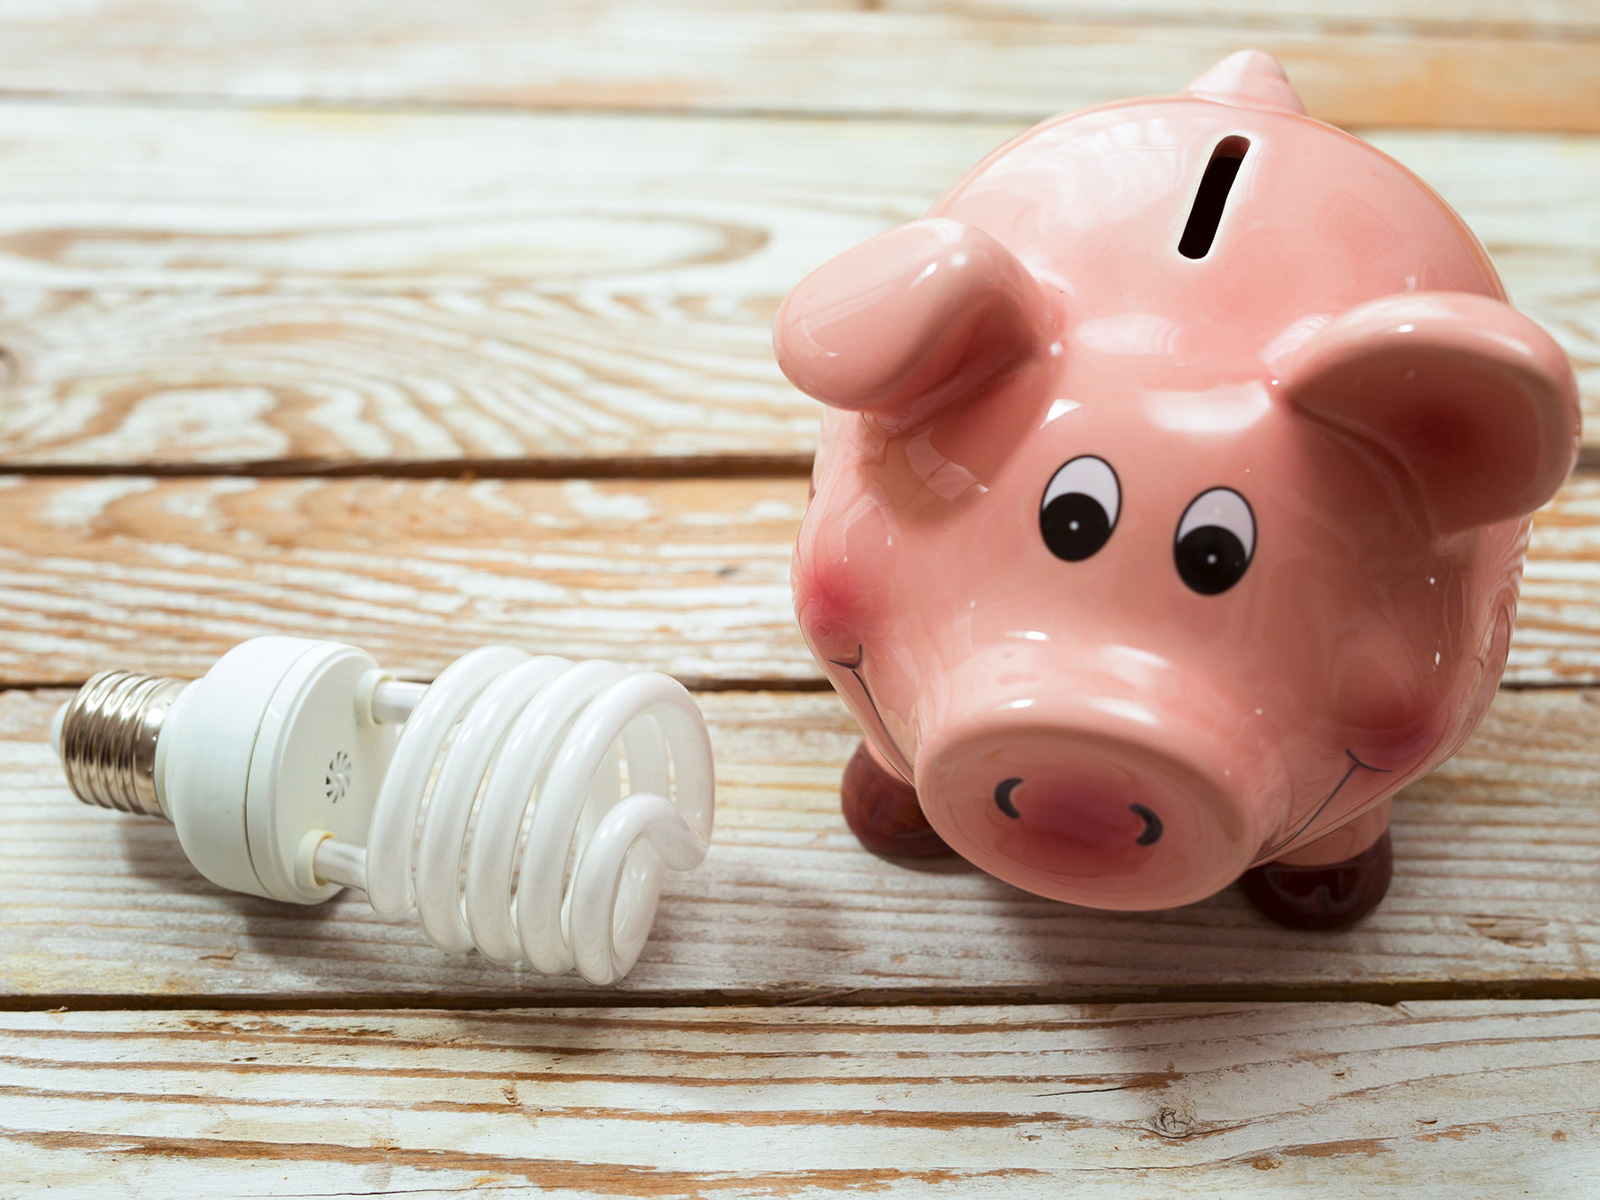 Piggy bank next to an energy saver light bulb